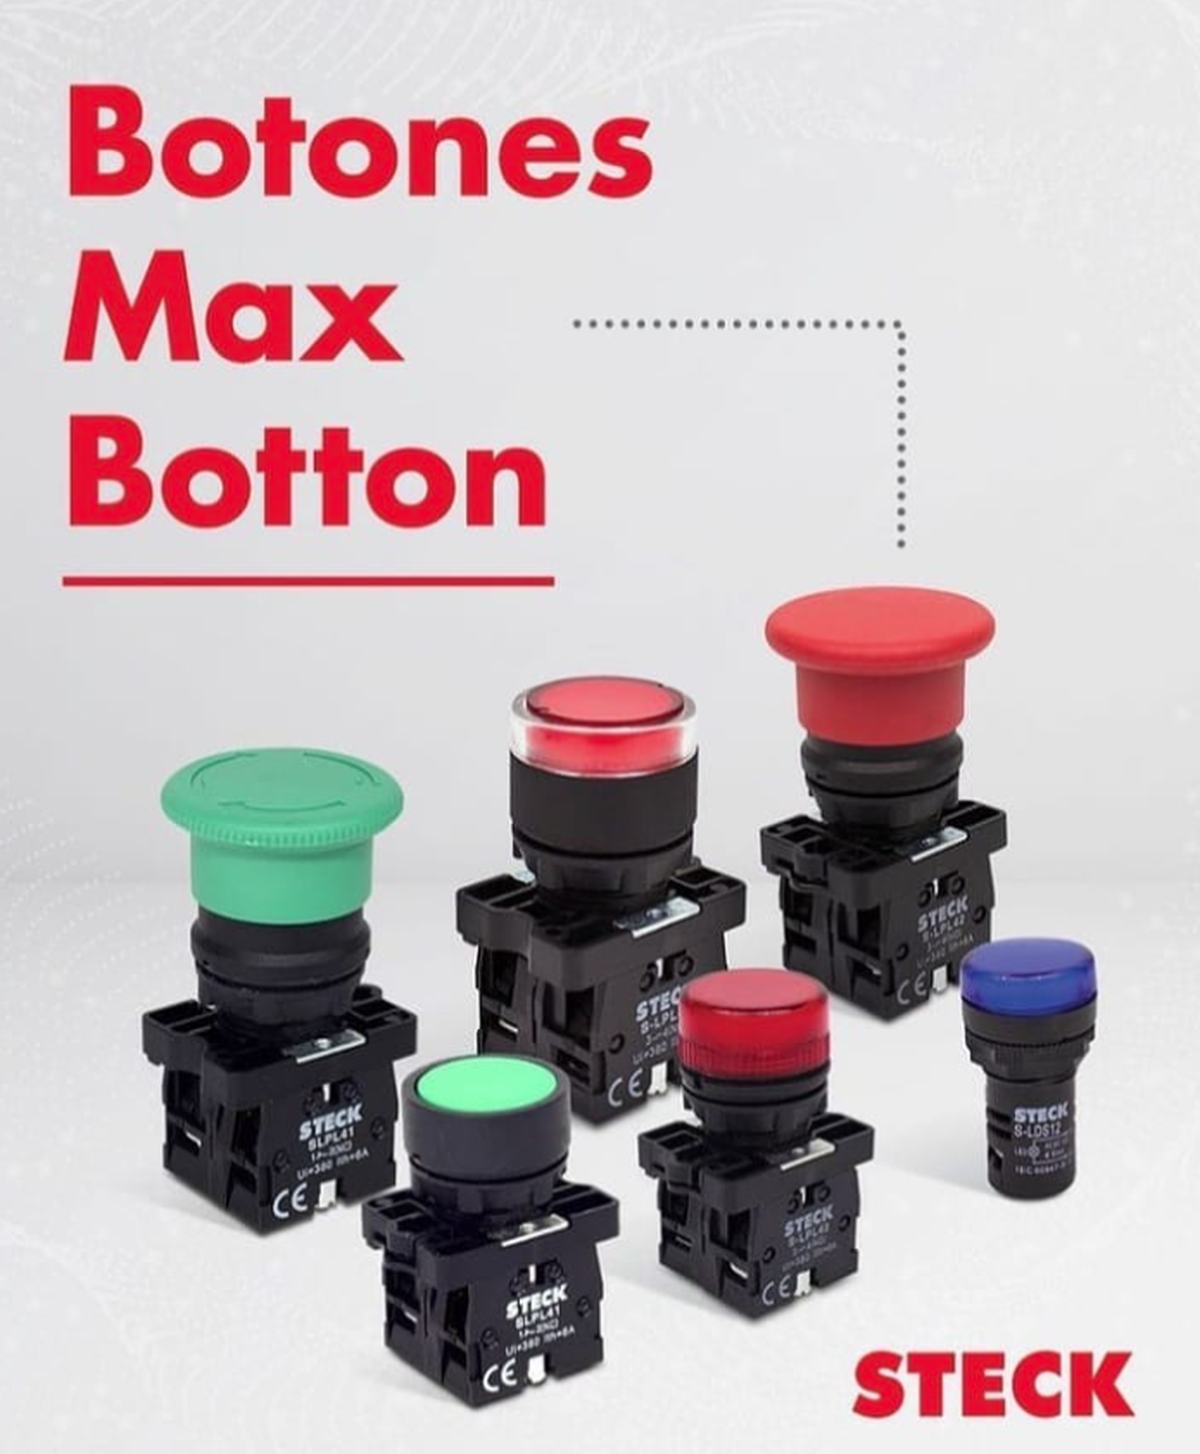 Botones Max Botton de Steck